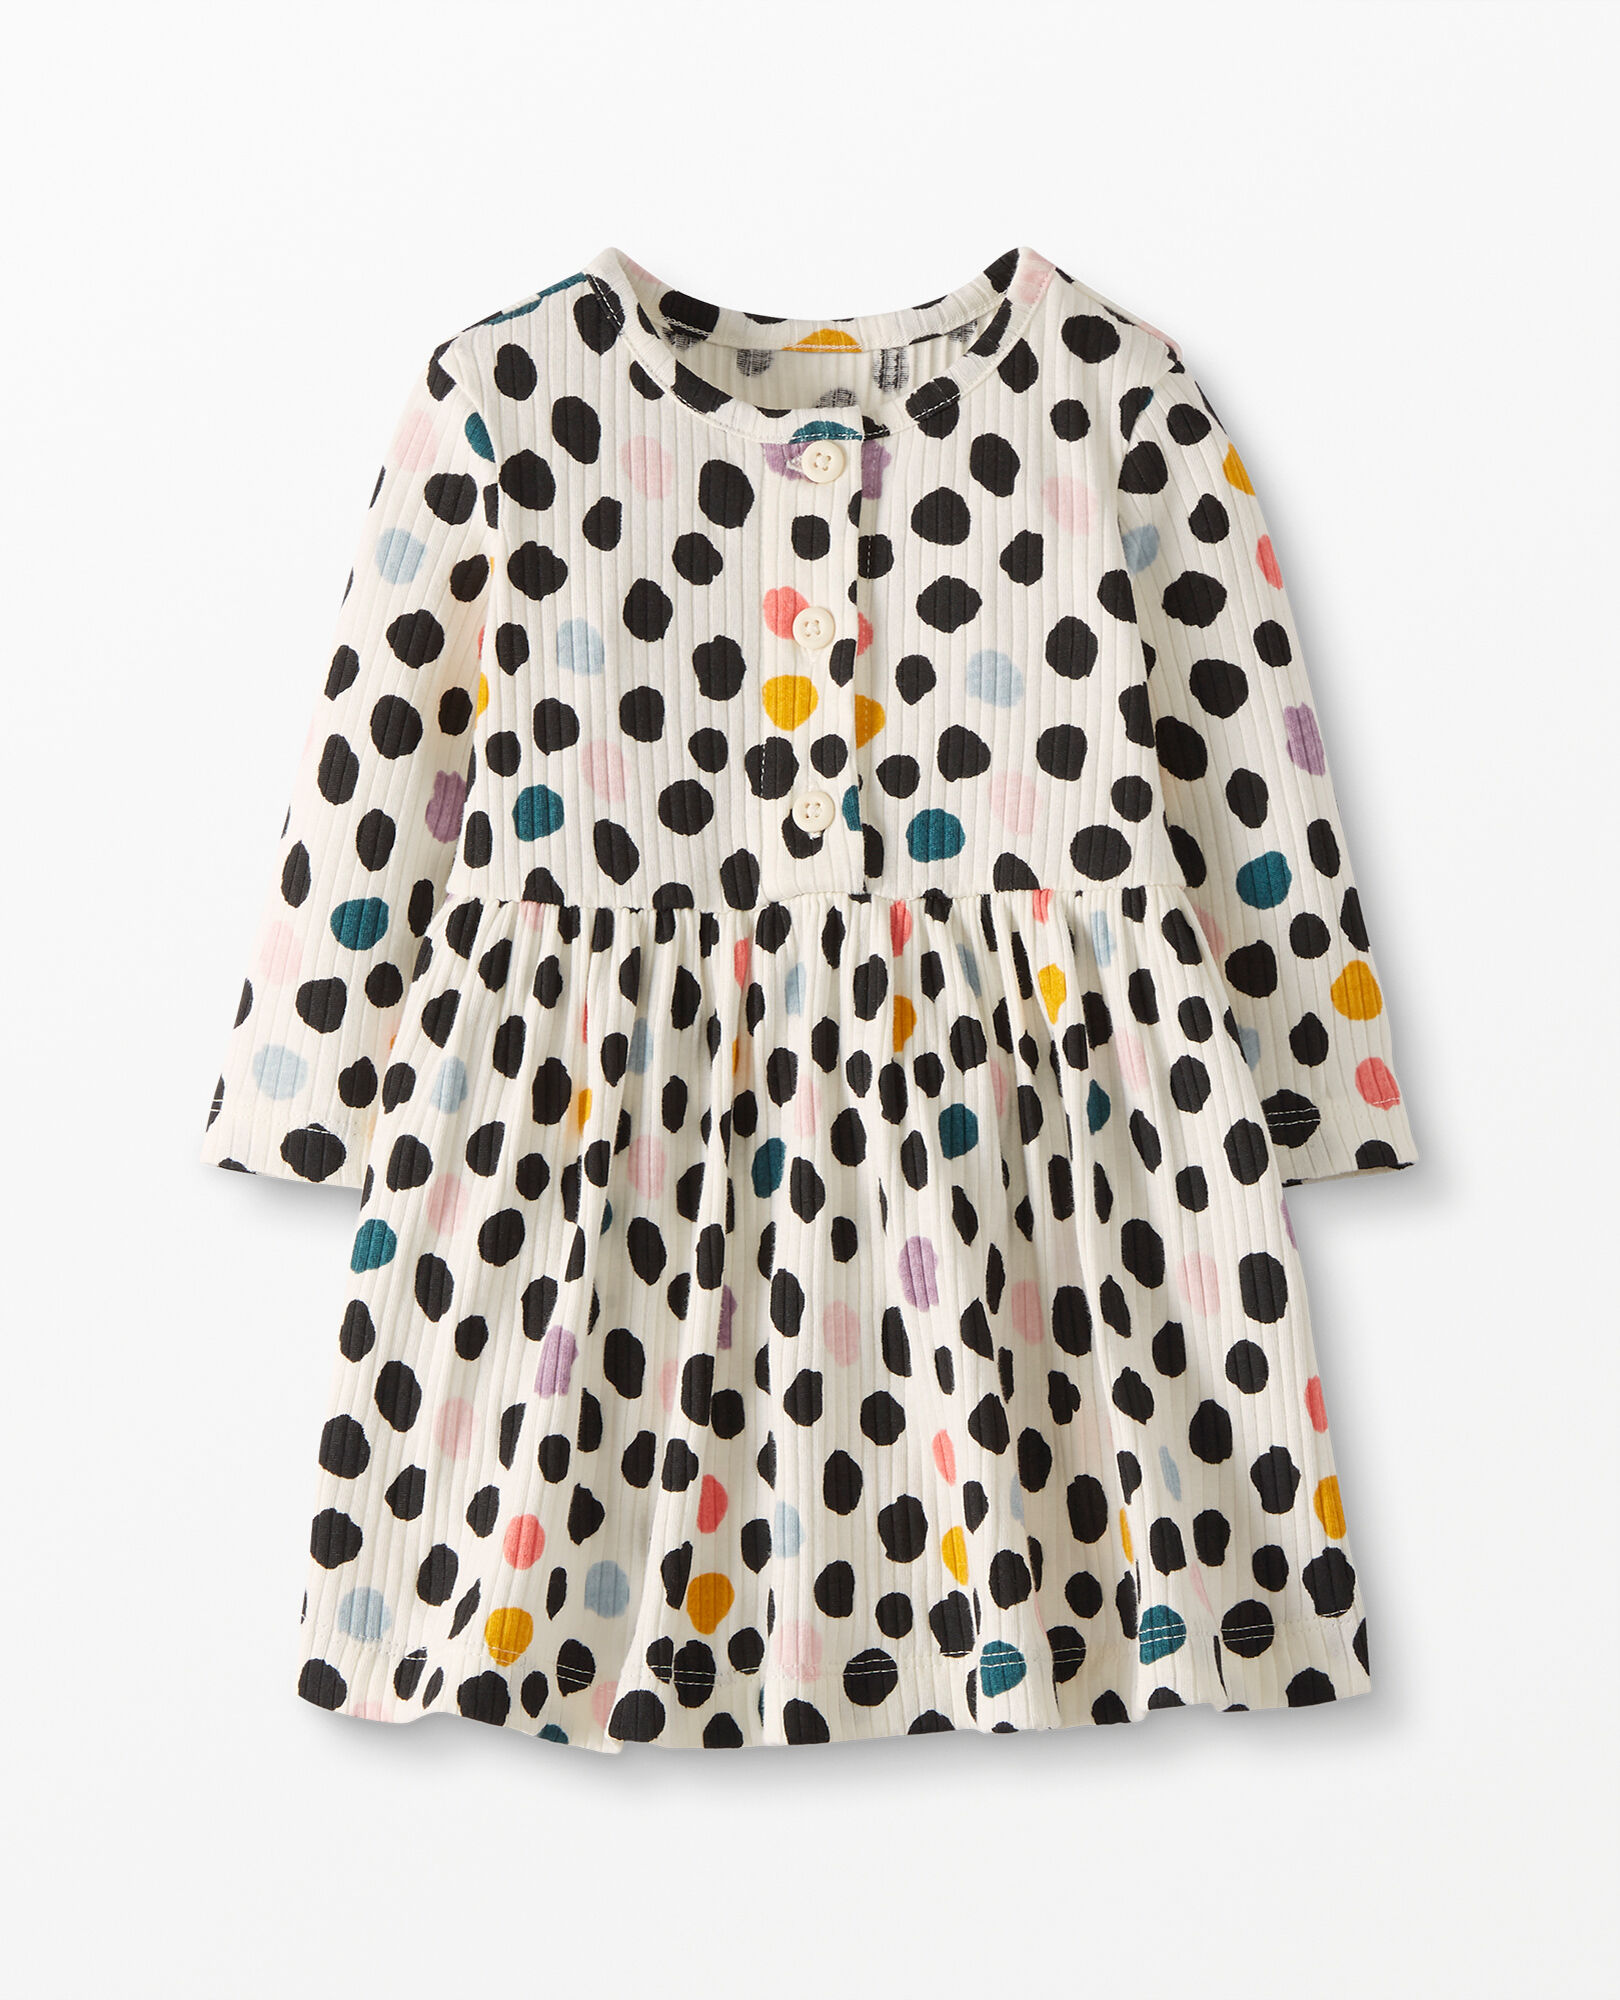 Hanna Andersson Baby Dress Polka Dot Cotton Pockets 70 75 NWT 